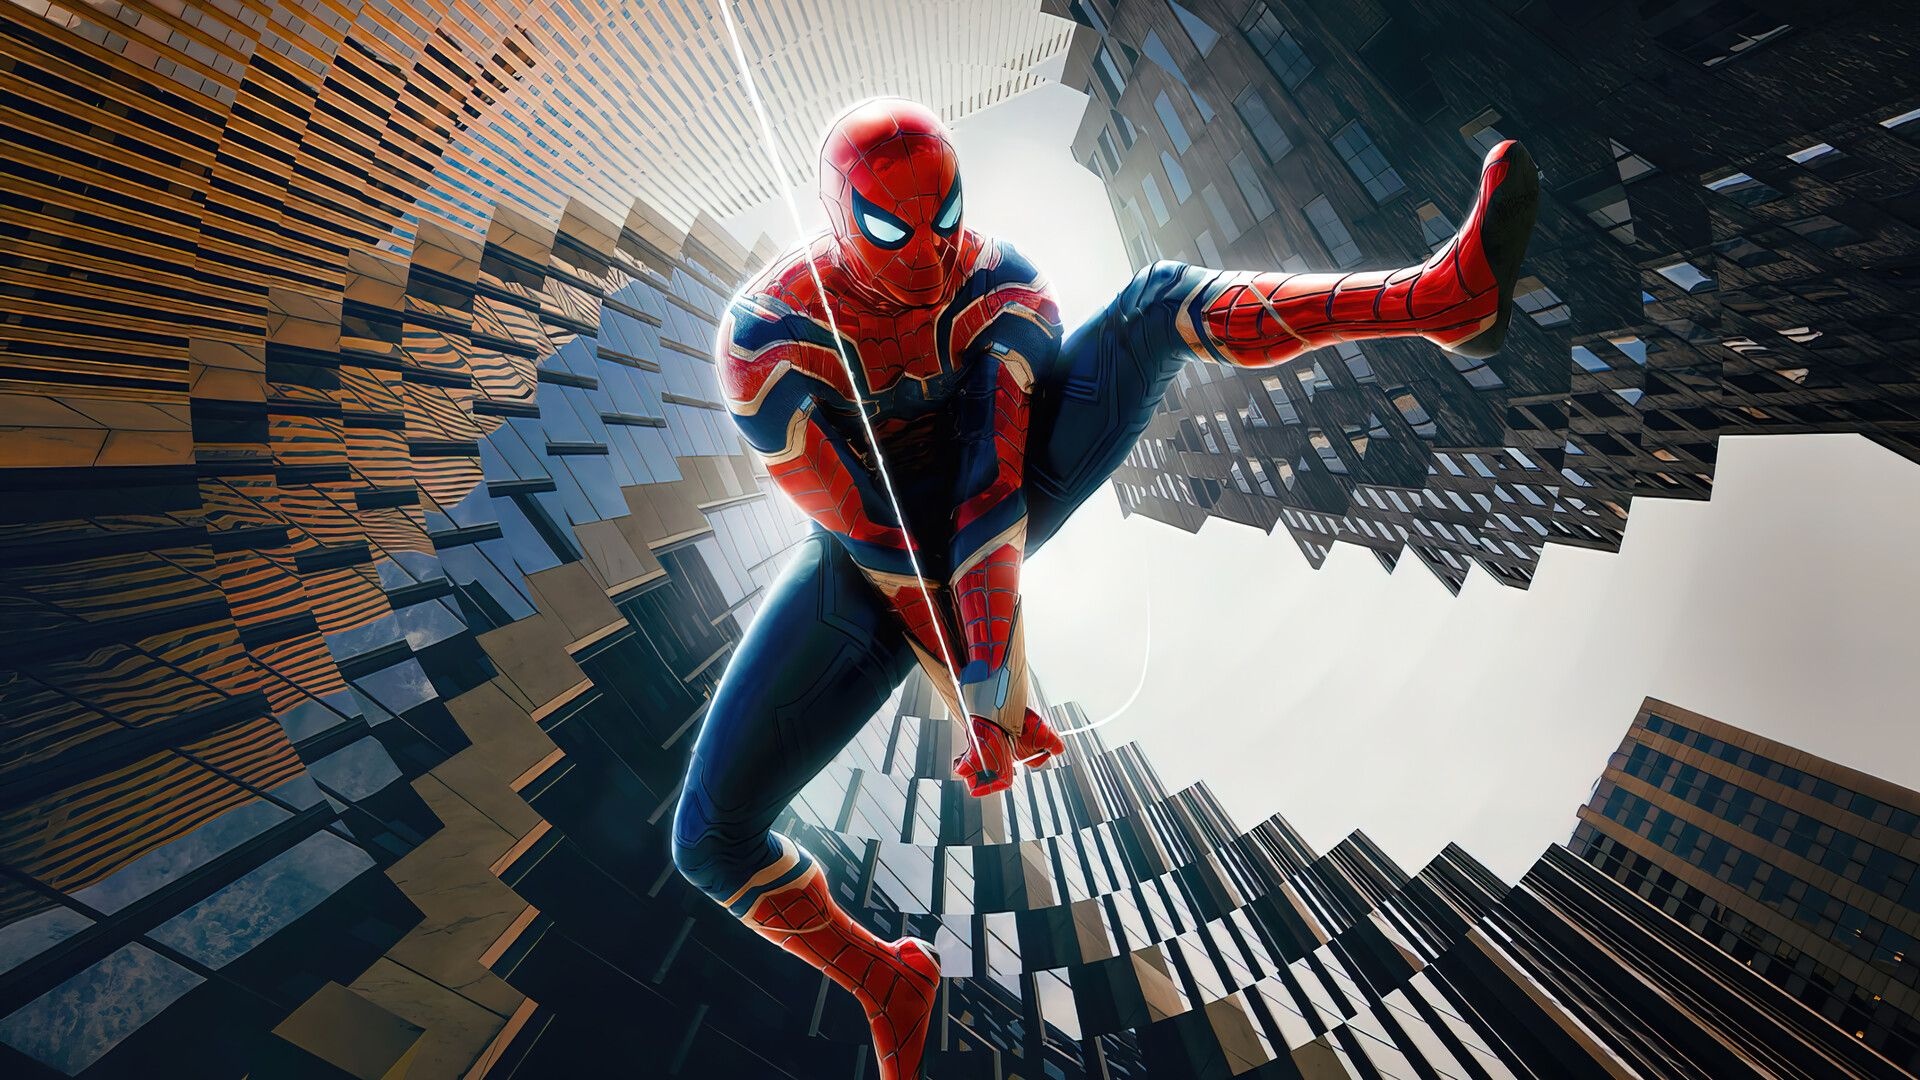 Cool Spider-Man wallpapers, Top 25 backgrounds, 1920x1080 Full HD Desktop